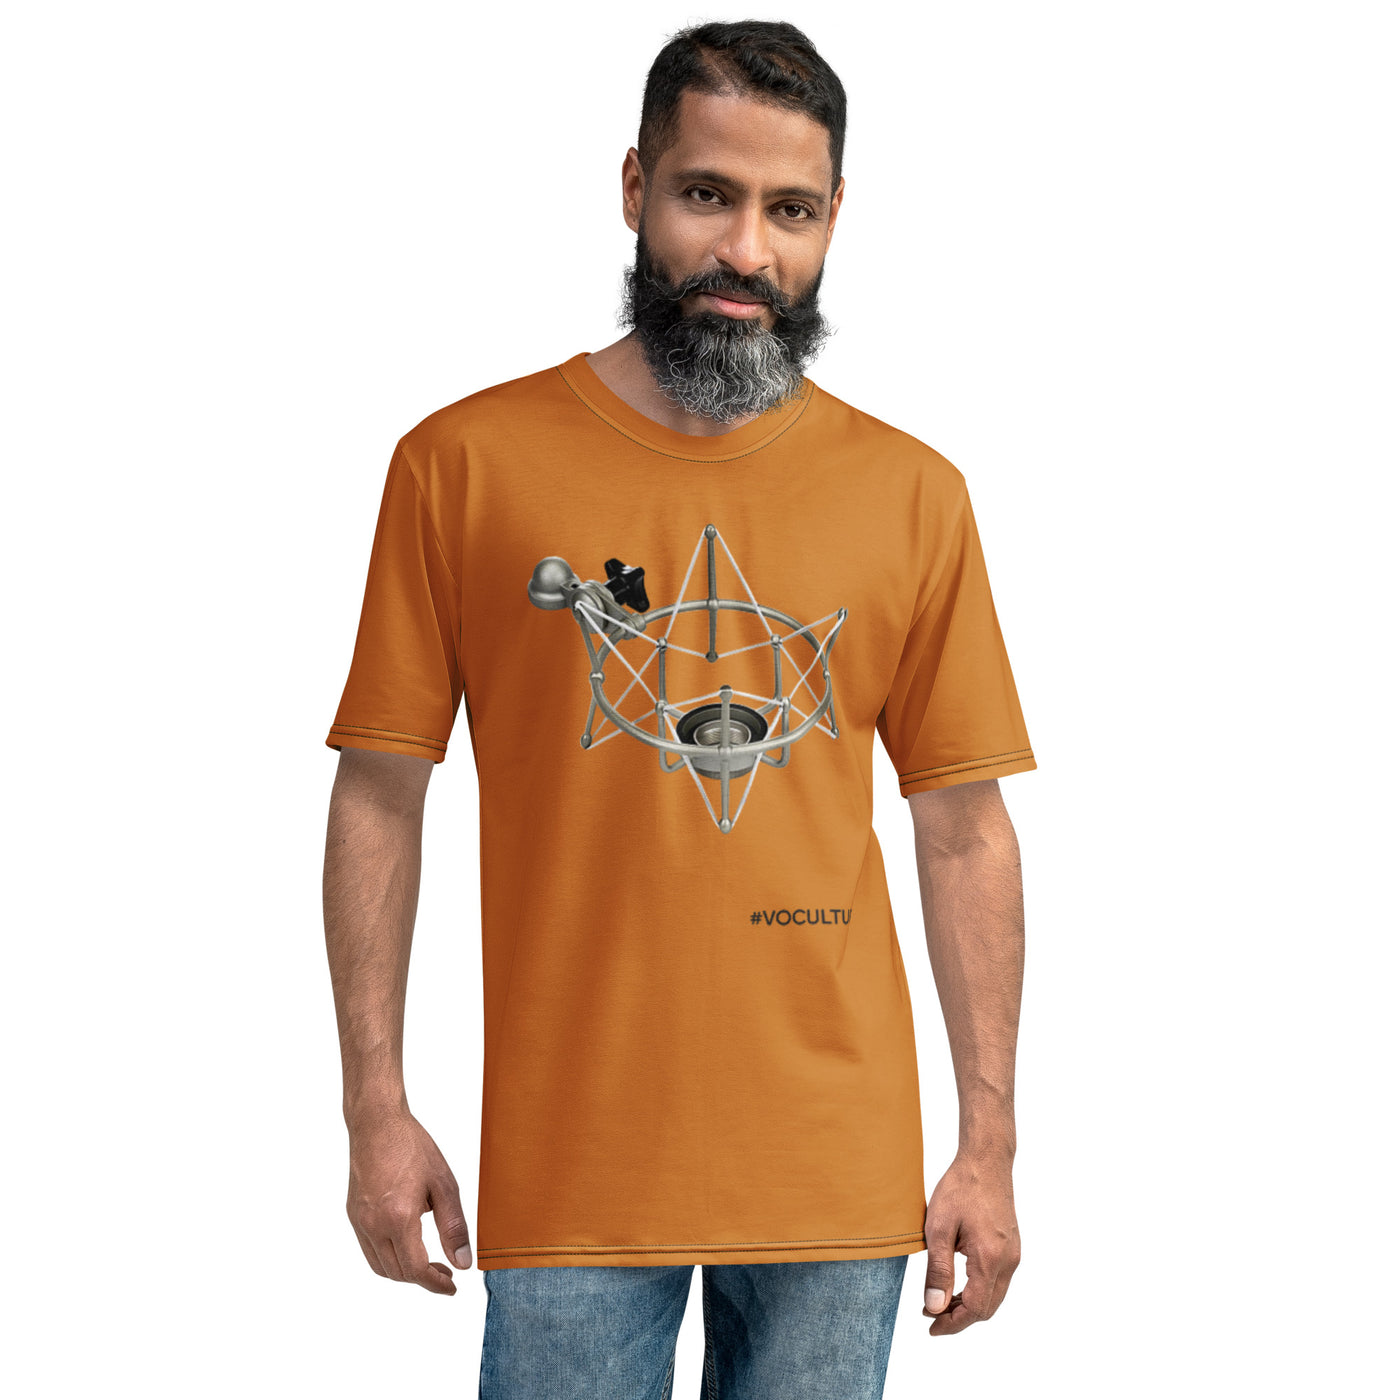 SHOCK MOUNT Male t-shirt